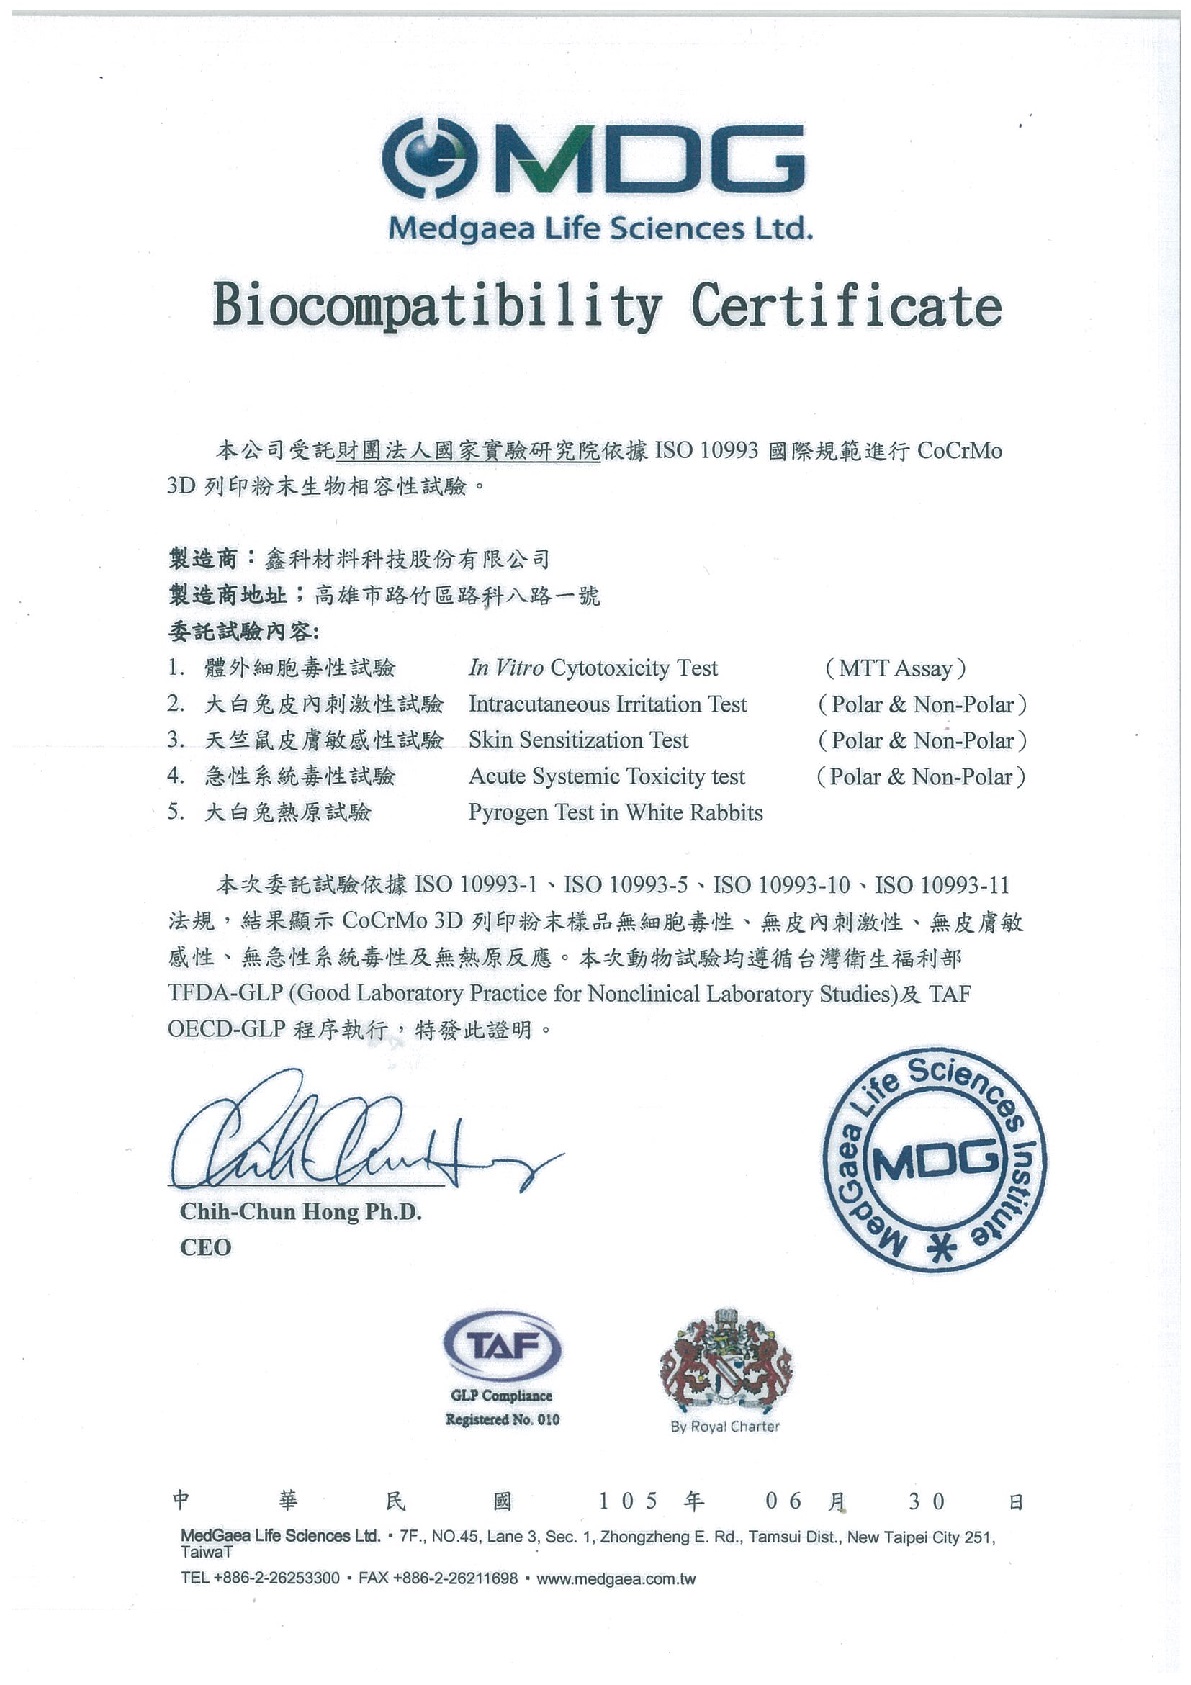  Biocompatibility Certificate 1